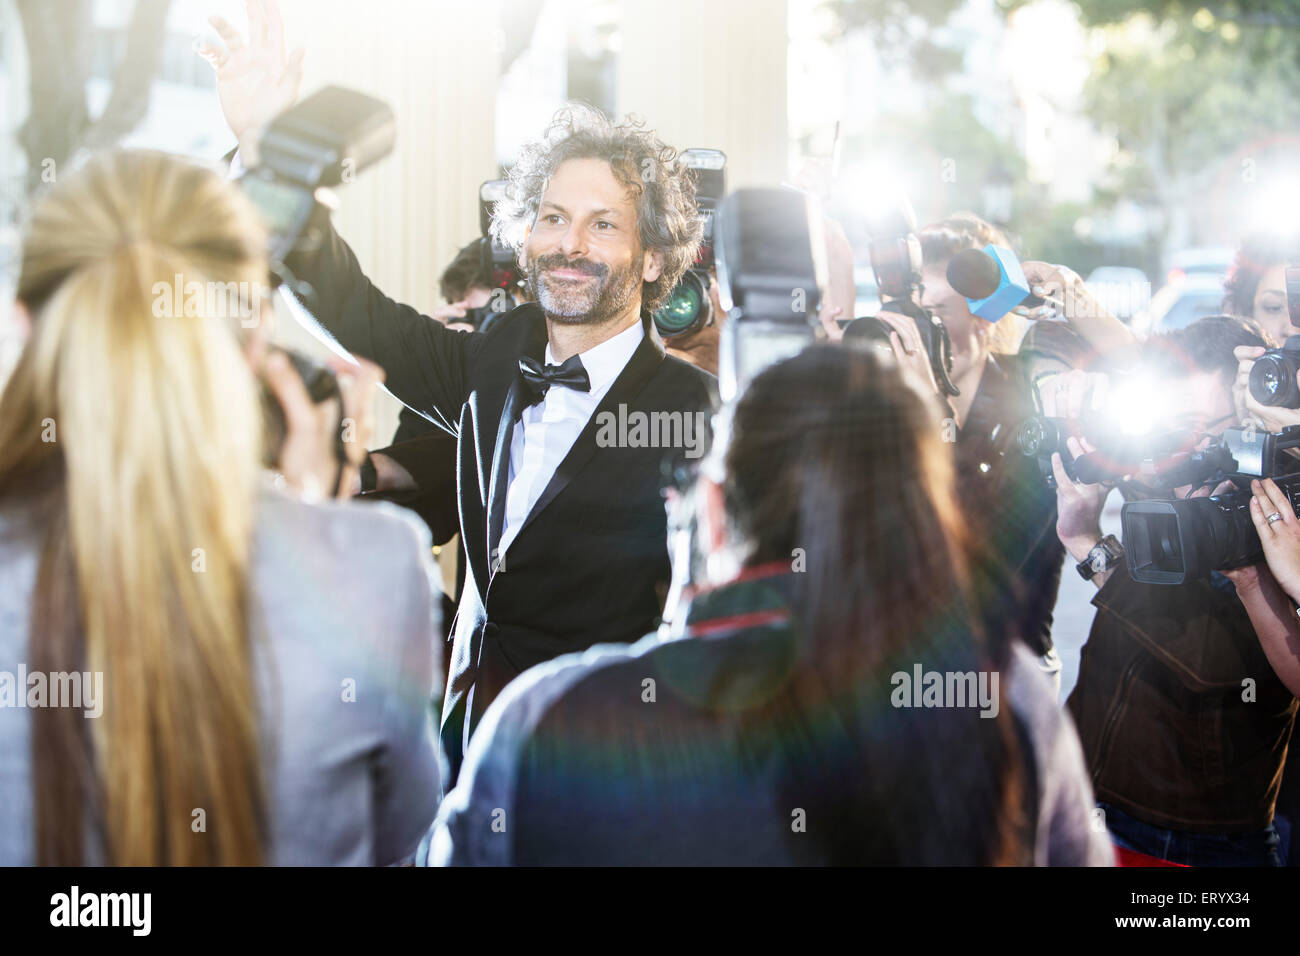 Celebrity waving at paparazzi photographers at event Stock Photo